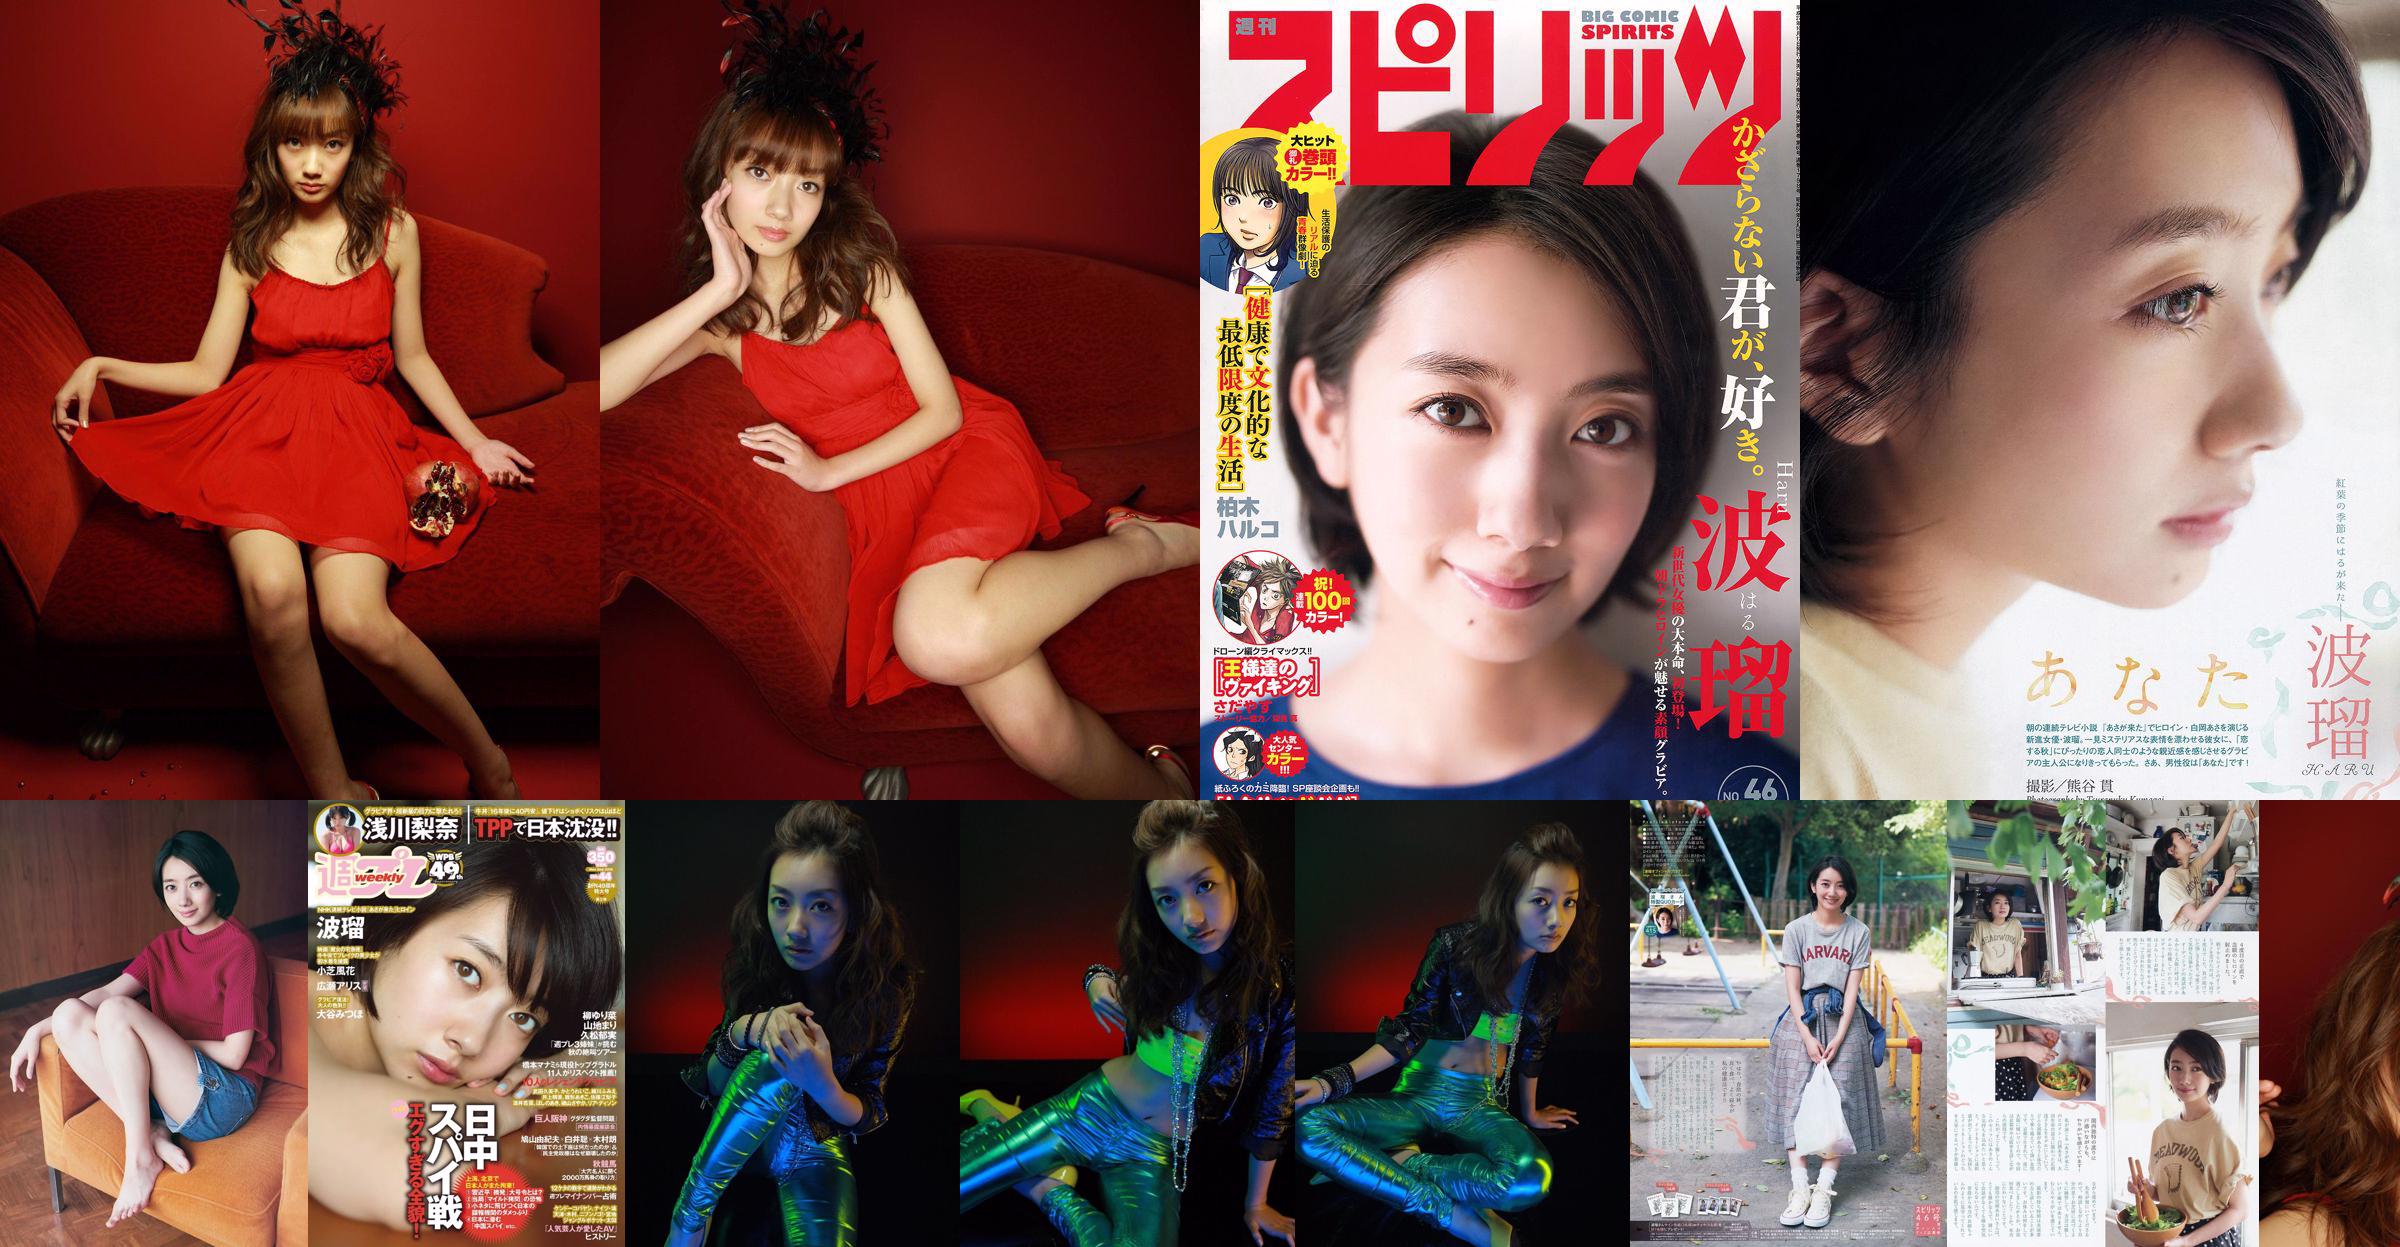 Haru, Asagawa Rina, Xiaozhi Fenghua, 広瀬アリス, Otani みつほ [Weekly Playboy] 2015 No.44 Photo Magazine No.1a82ee Page 1